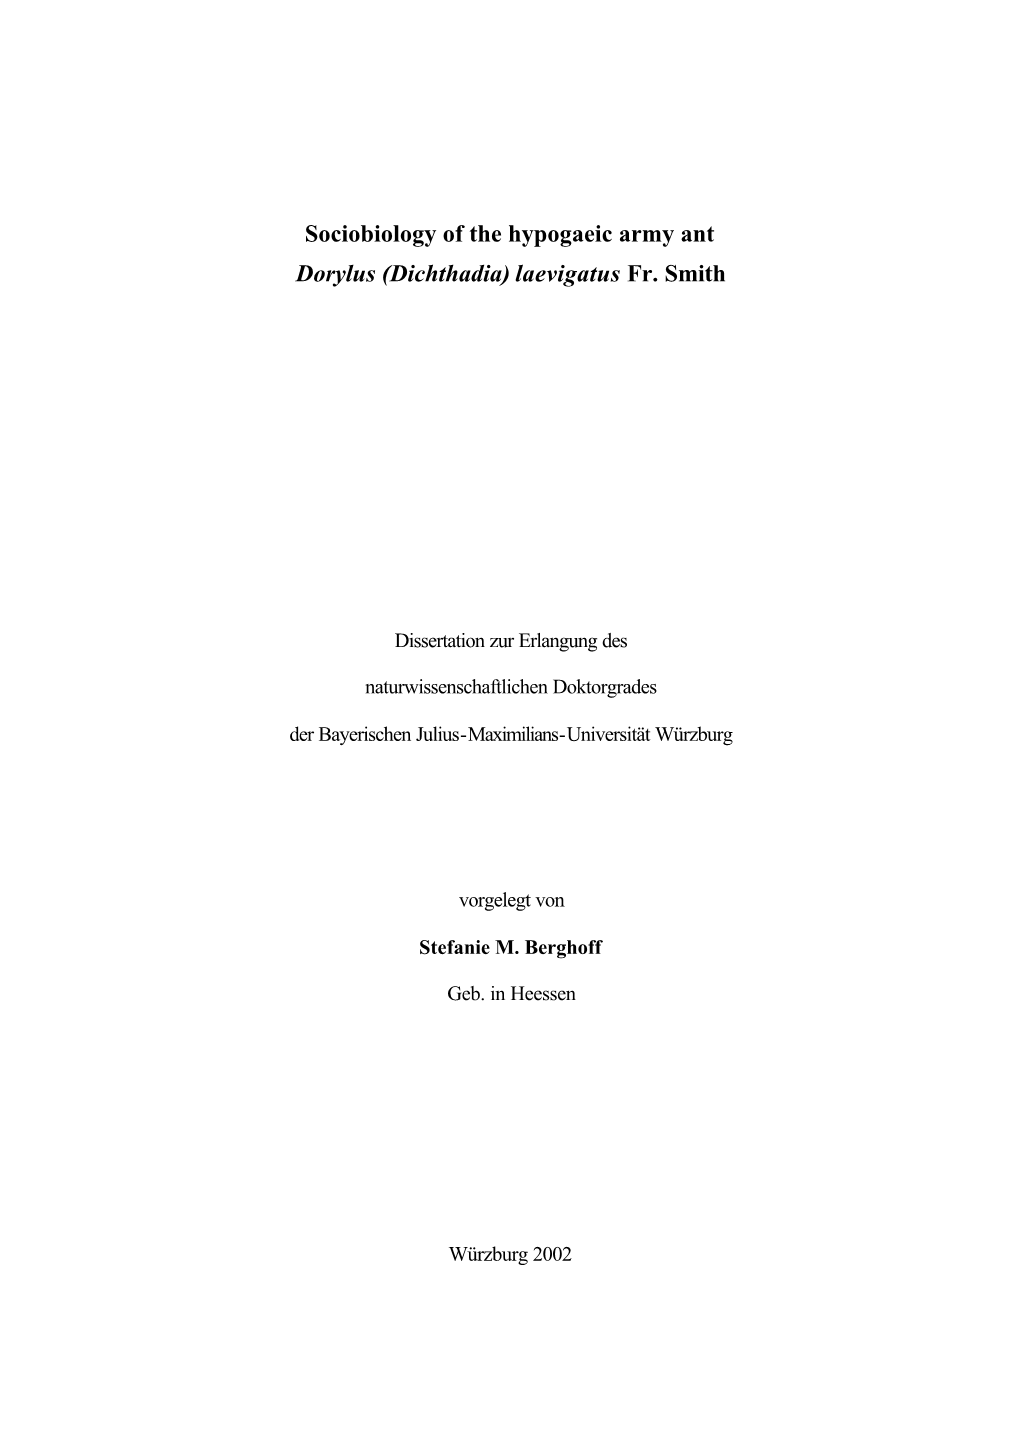 Sociobiology of the Hypogaeic Army Ant Dorylus (Dichthadia) Laevigatus Fr